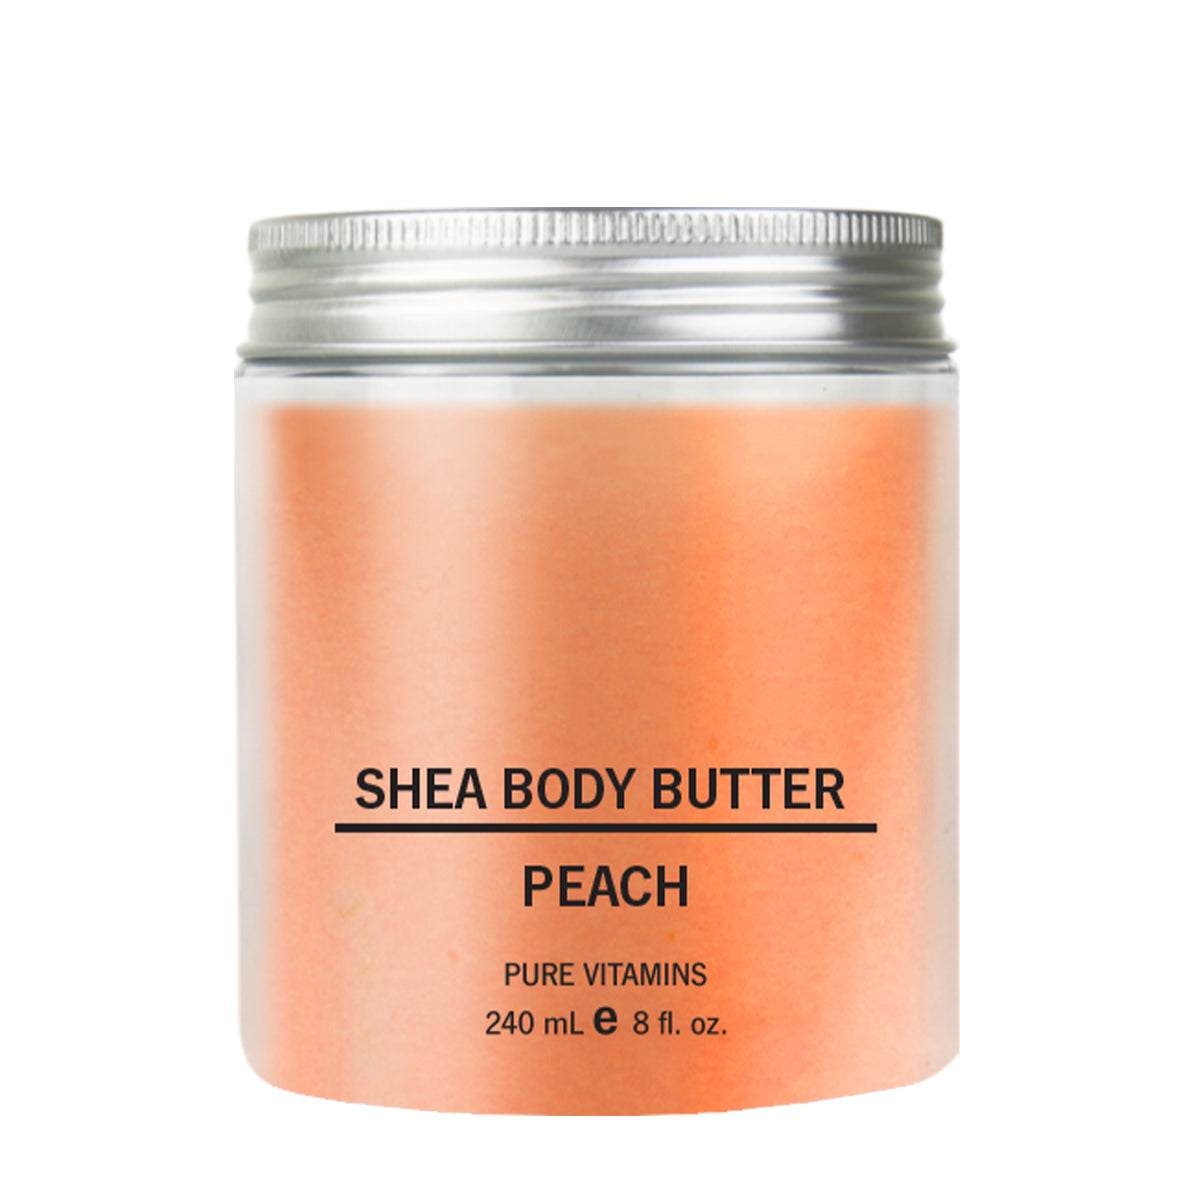 Shea Body Butter, Peach